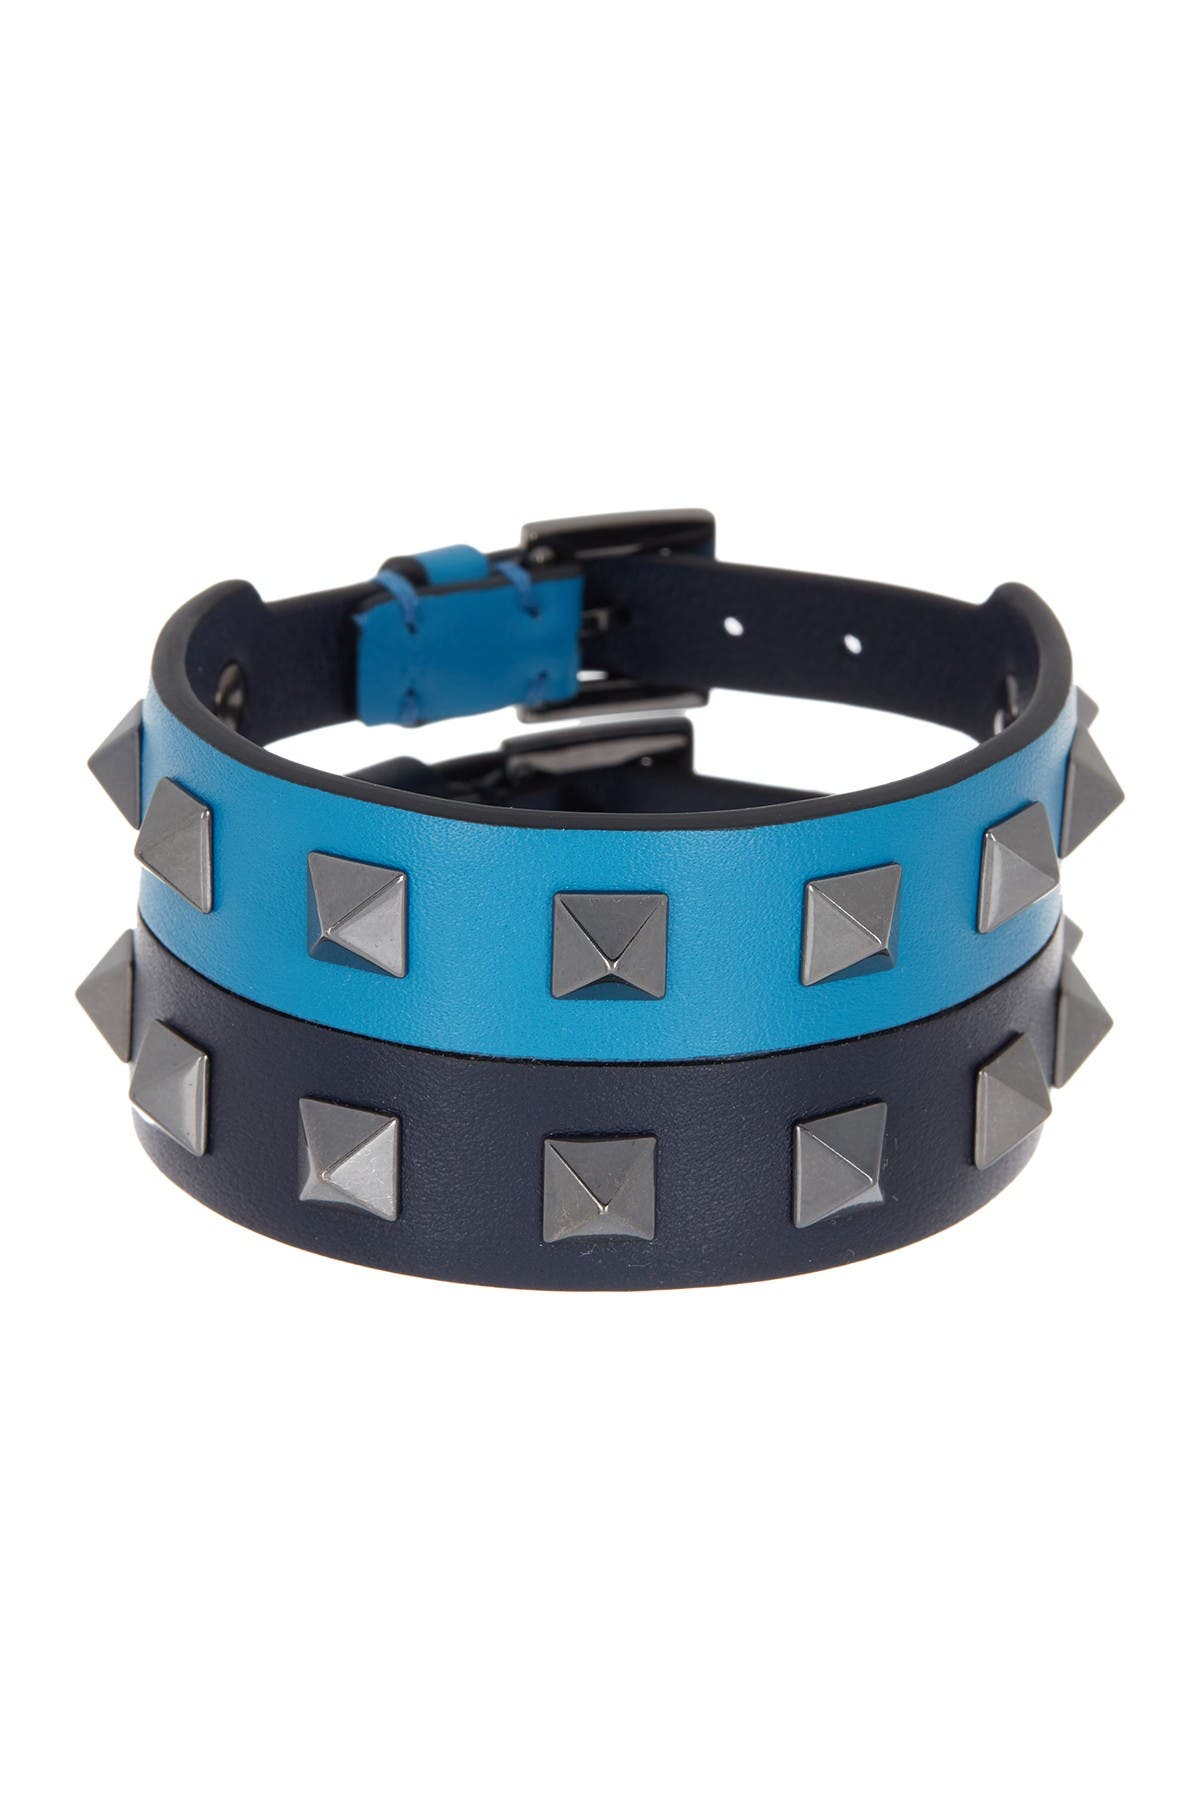 Valentino Garavani Studded Leather Bracelet Set In Marine/pool Blu